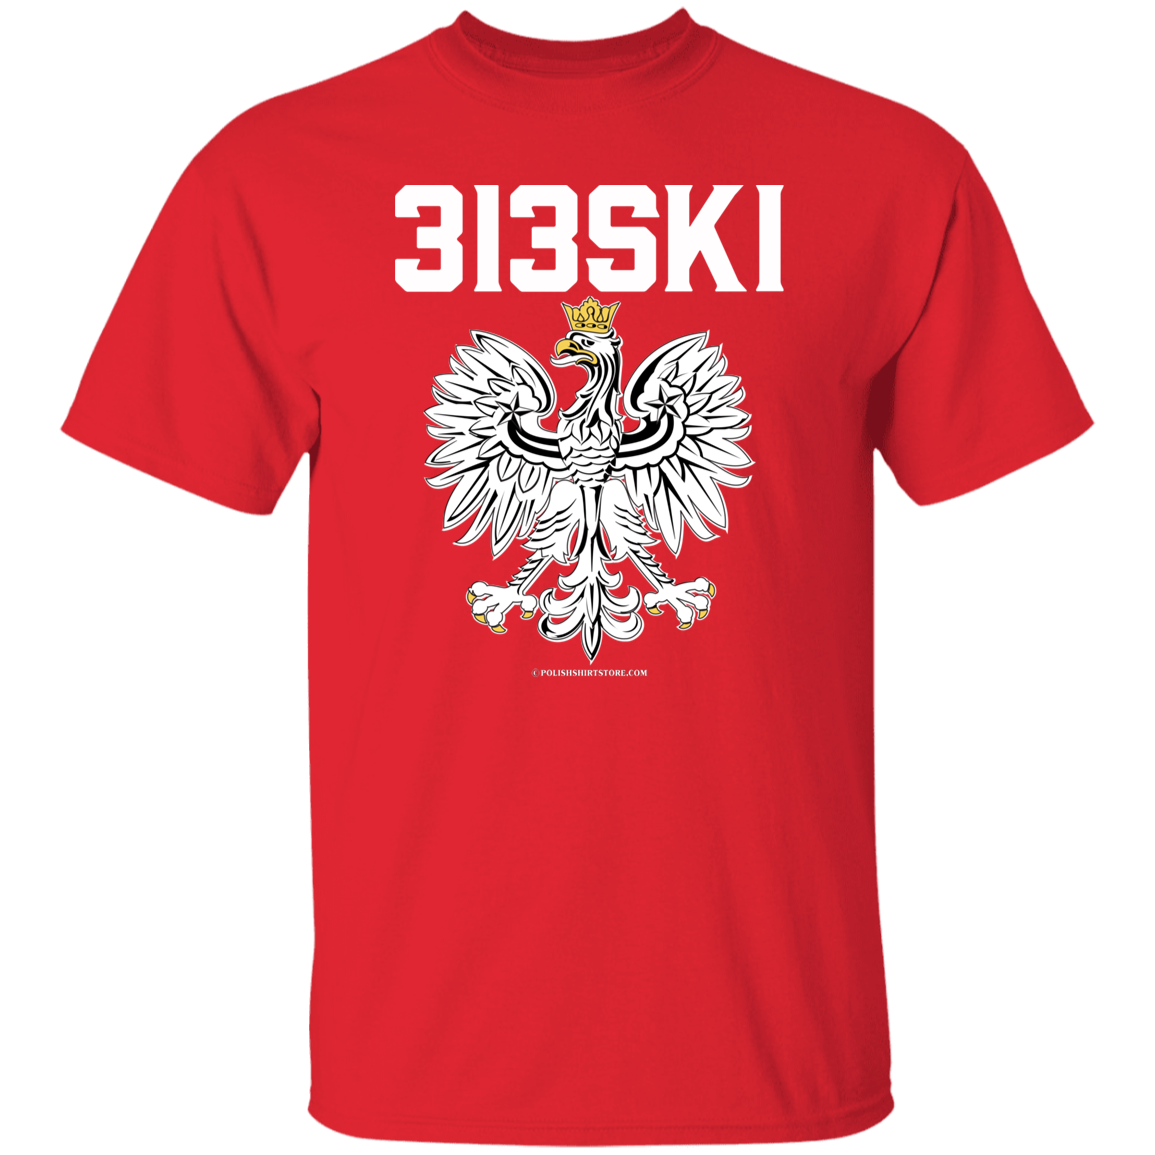 313SKI Apparel CustomCat G500 5.3 oz. T-Shirt Red S